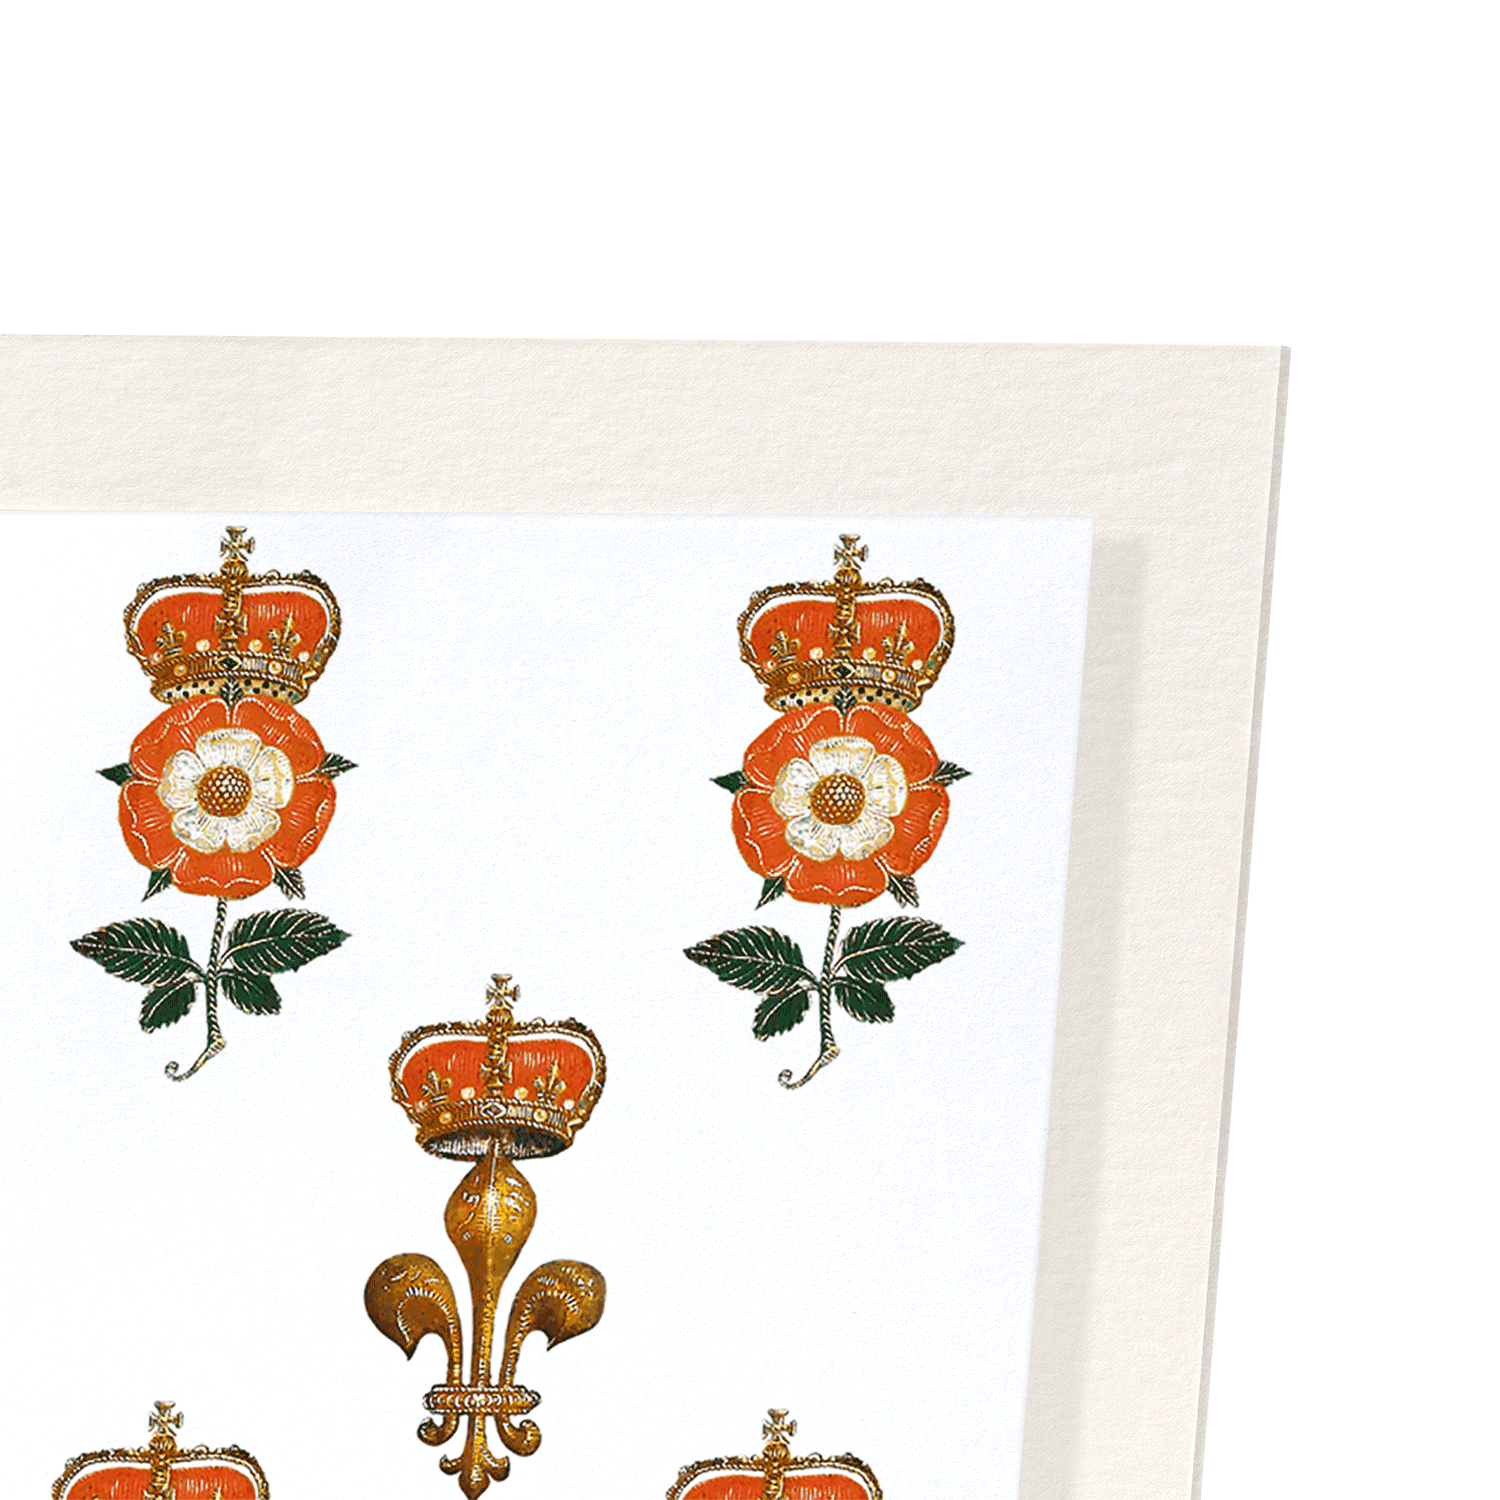 ROYAL TUDOR EMBLEMS (C.1575): Pattern Art Print